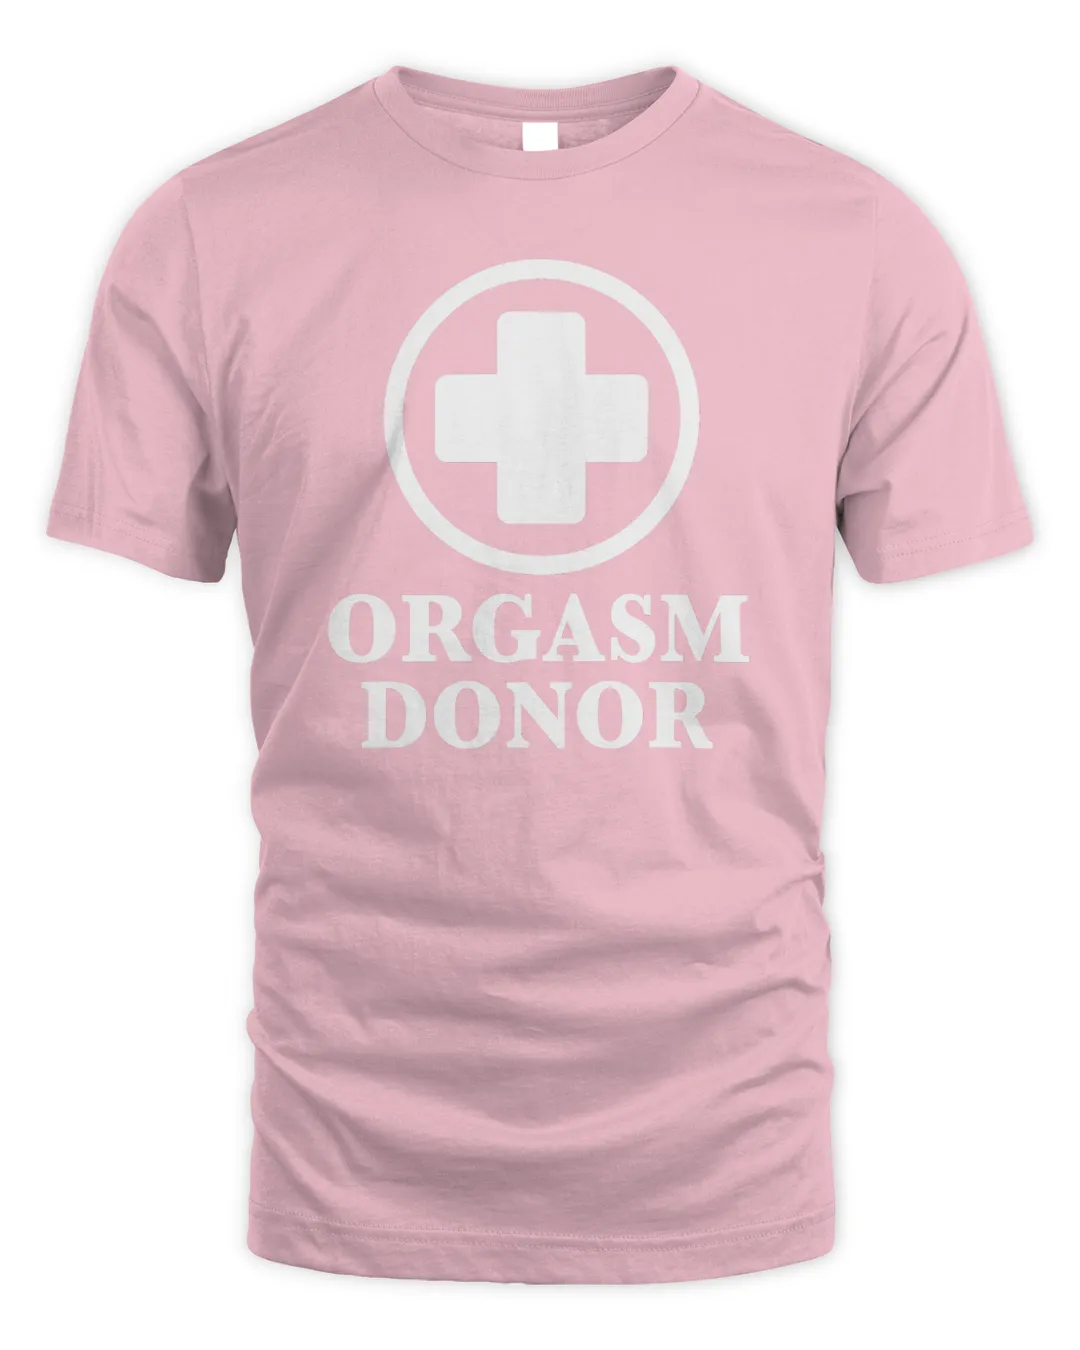 Orgasm Donor Black Sweatpants – Danny Duncan